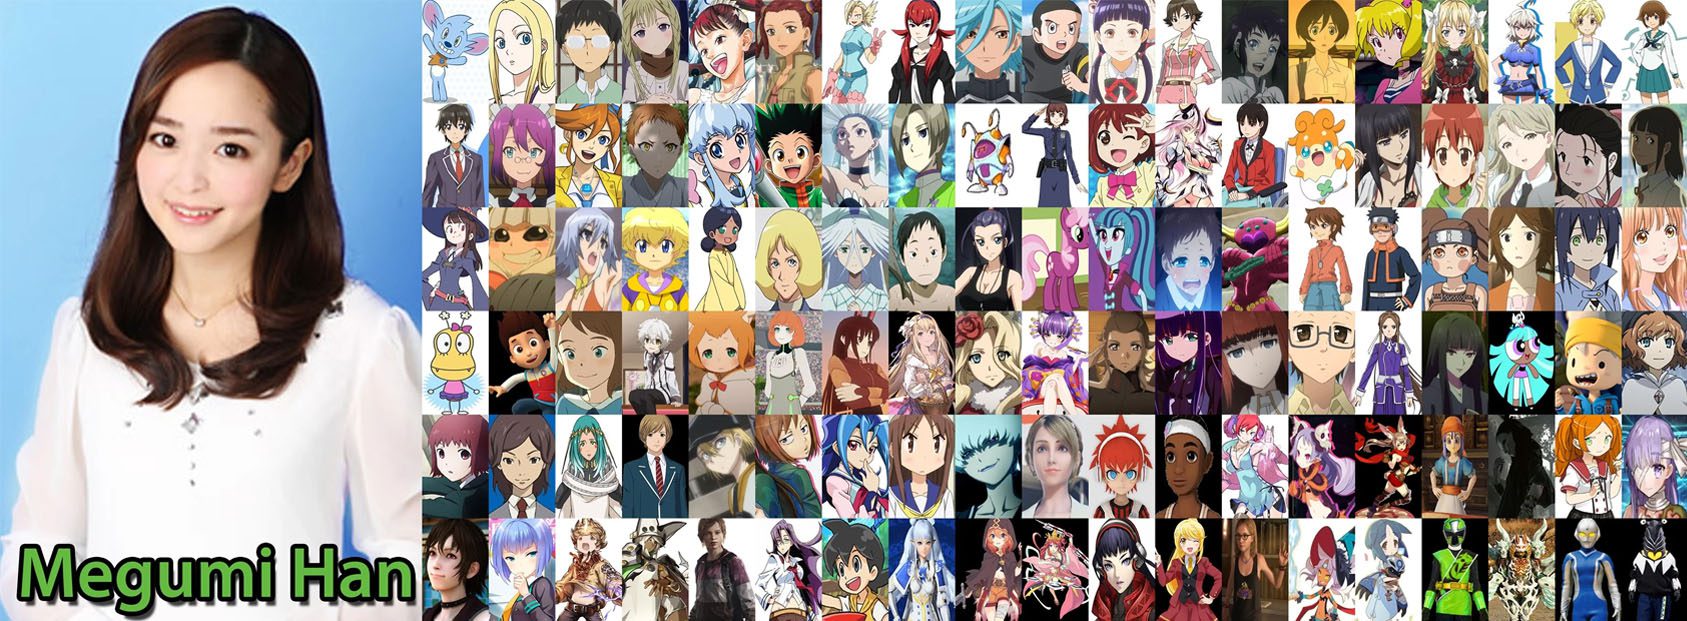 netflix anime megumi han anime characters